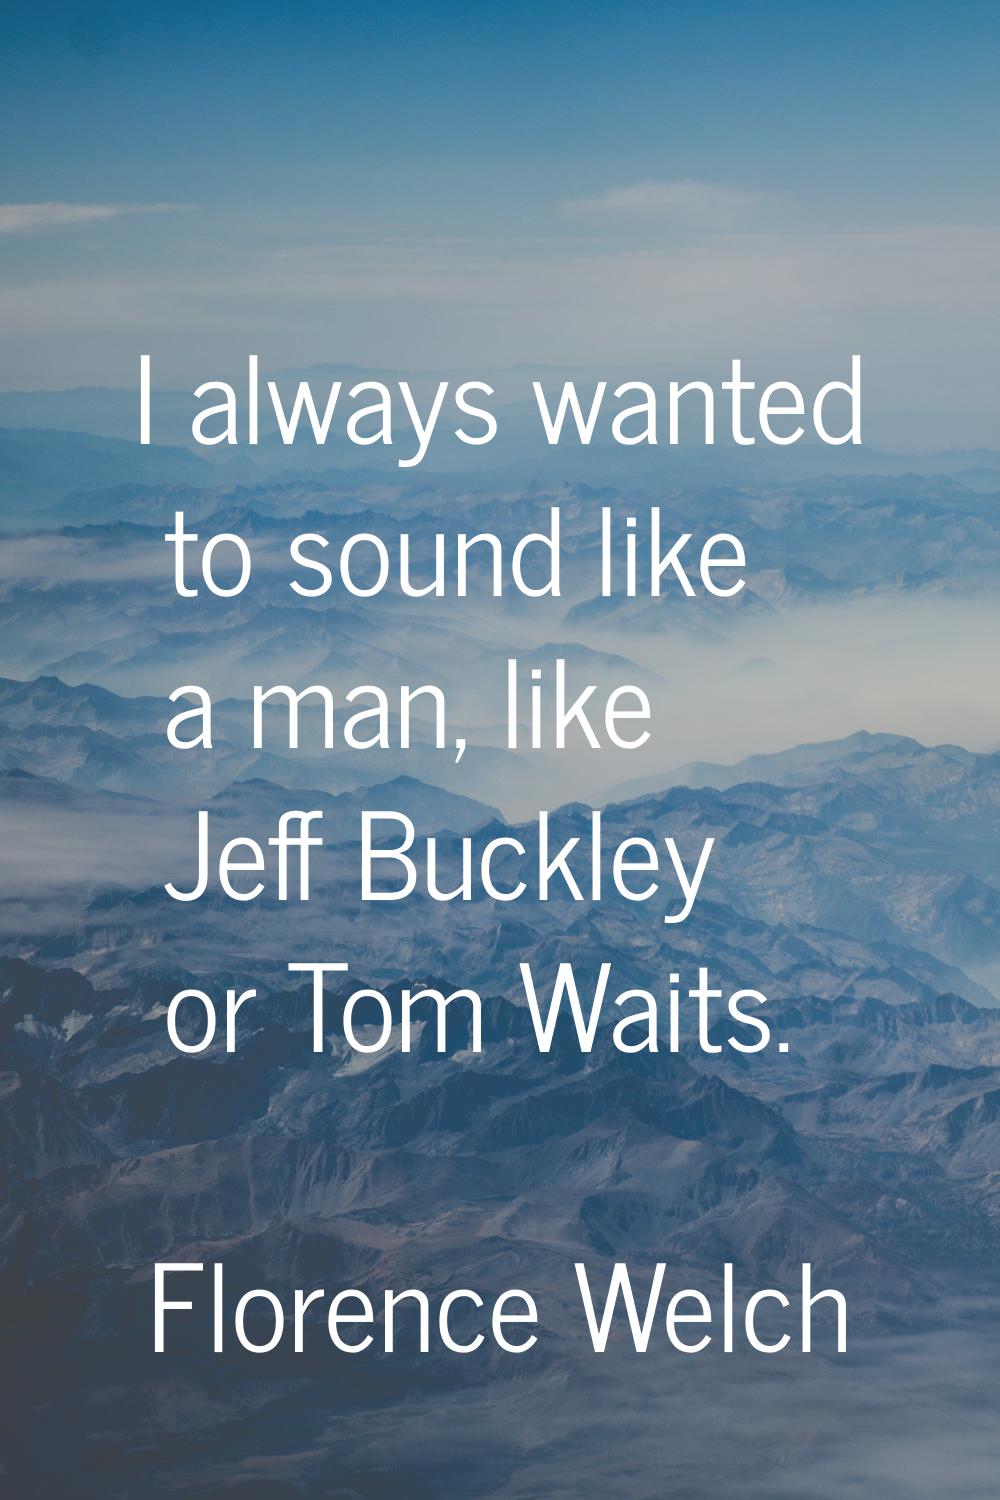 I always wanted to sound like a man, like Jeff Buckley or Tom Waits.